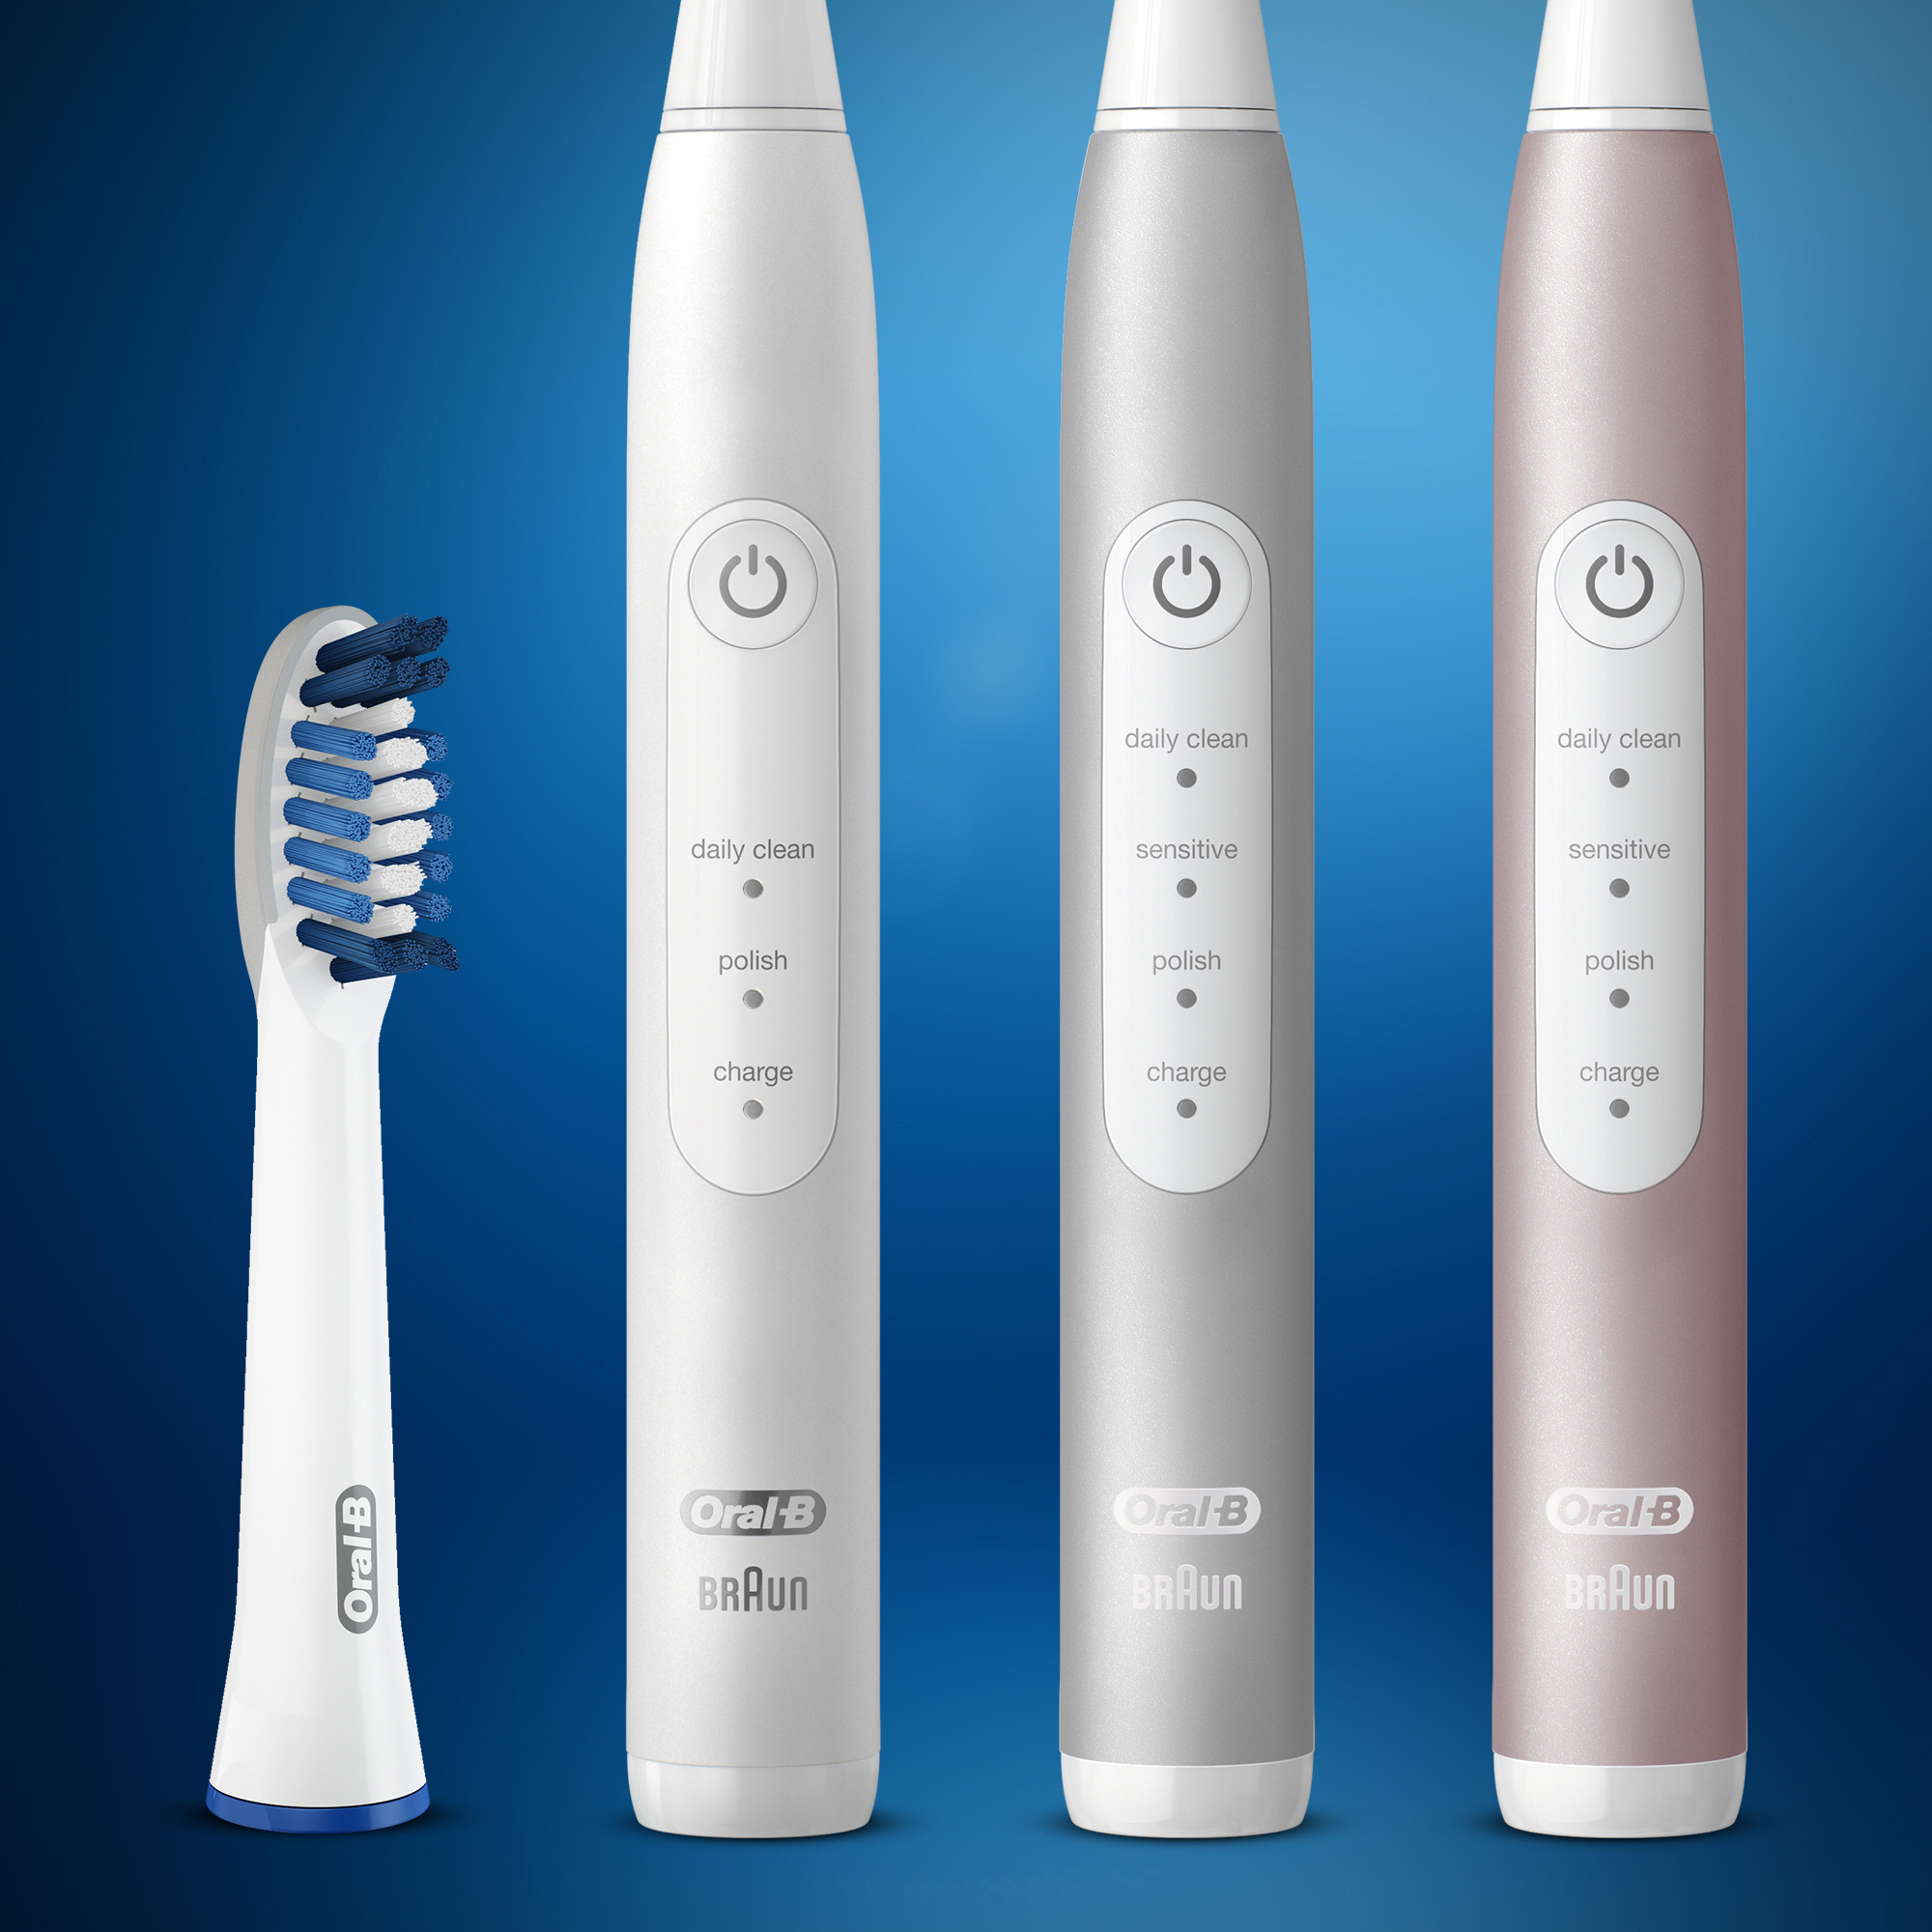 Електрична зубна щітка Oral-B Pulsonic Slim Luxe 4900 S411.526.3H типу 3717, 2 шт. - фото 11